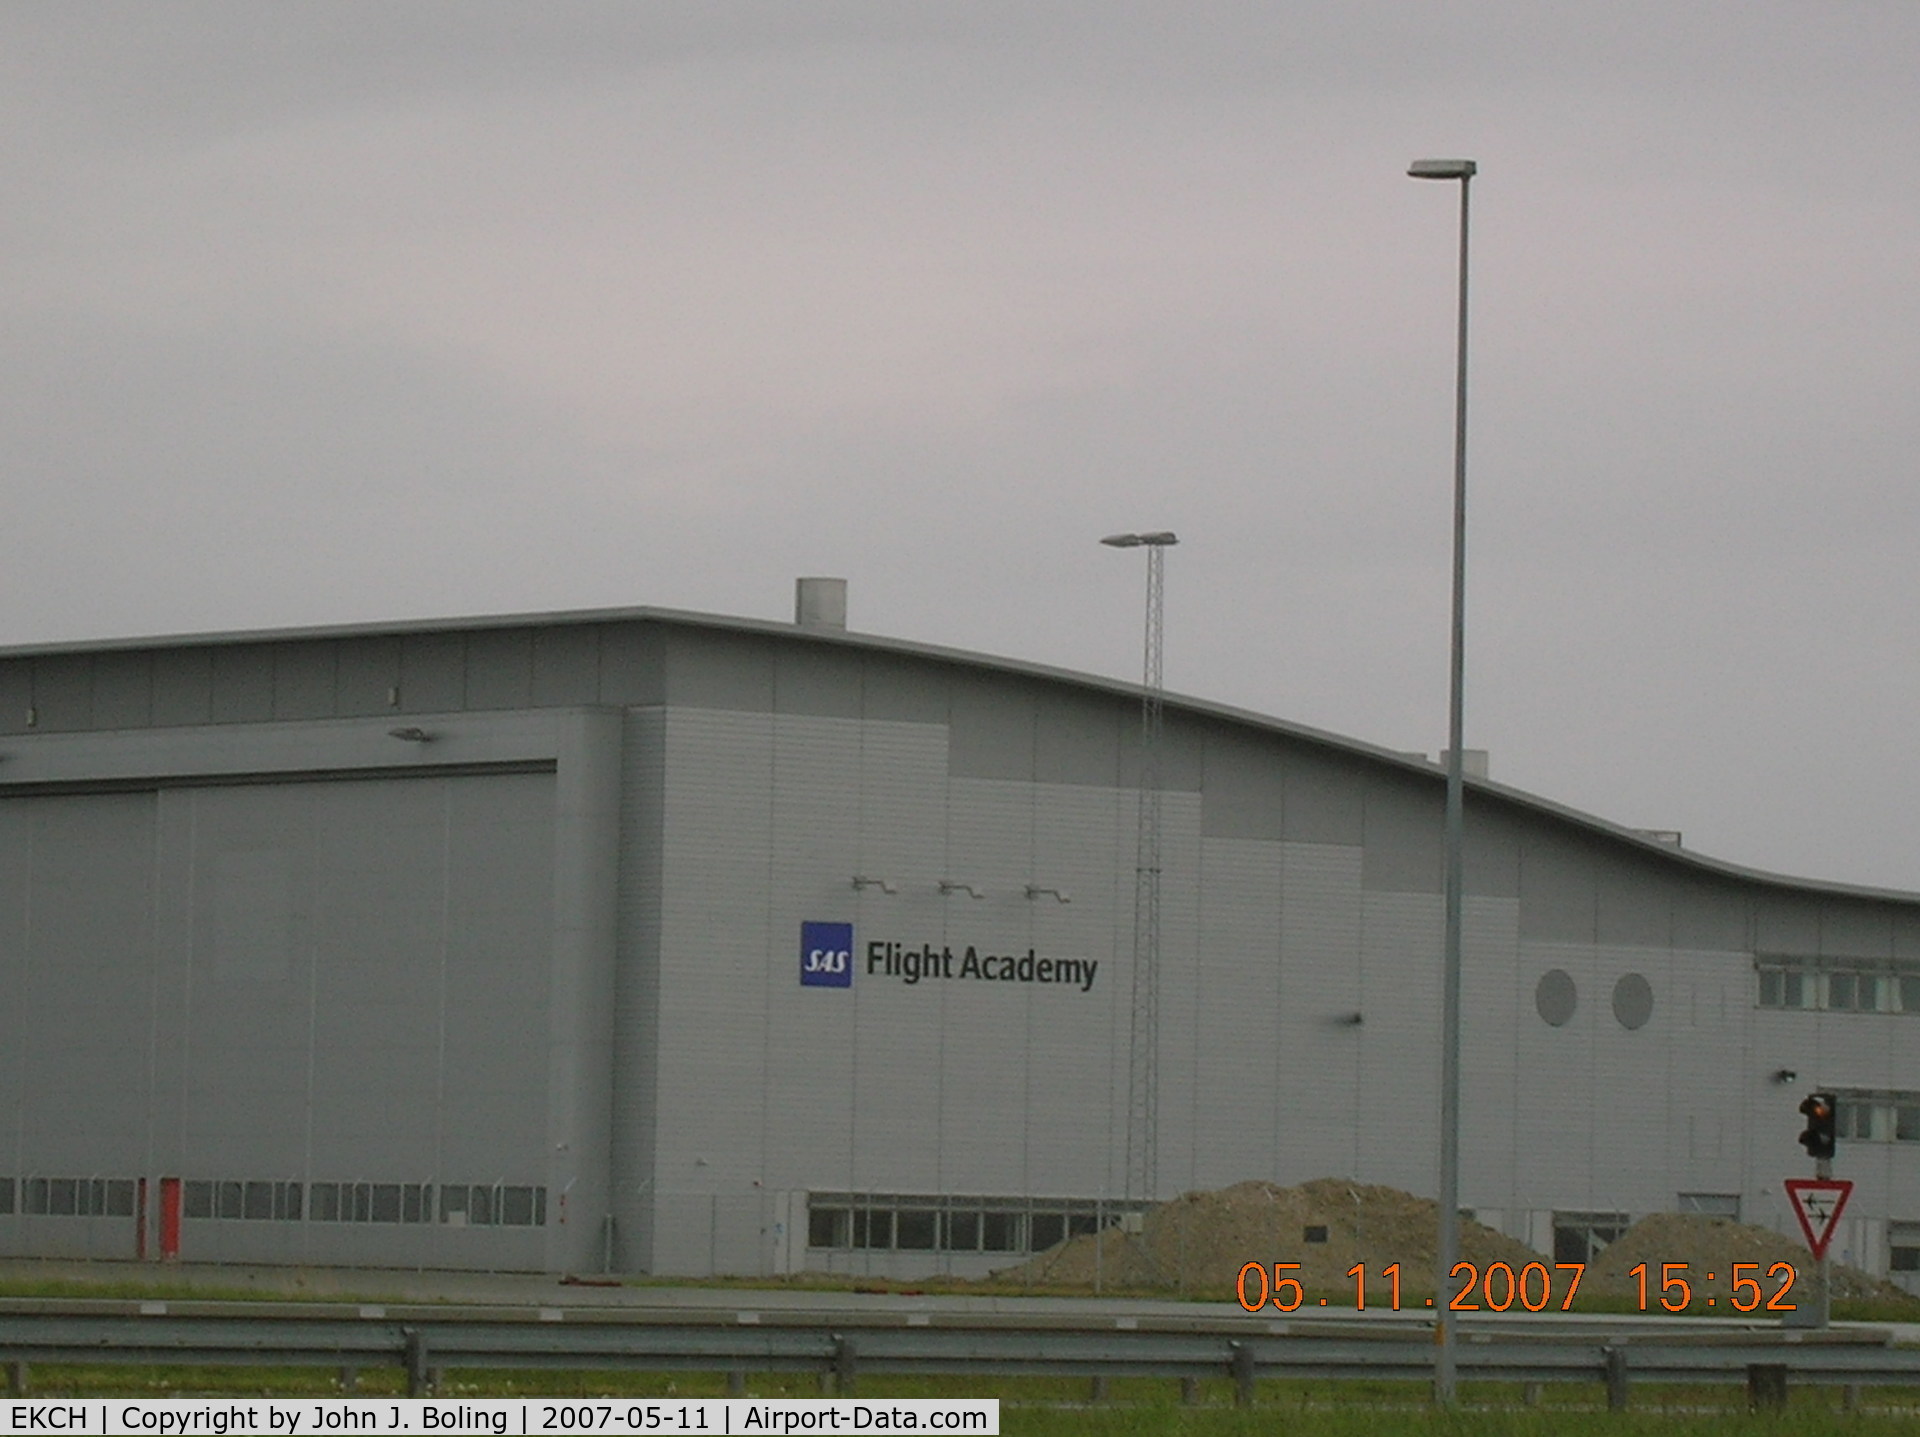 Copenhagen Airport, Kastrup near Copenhagen Denmark (EKCH) - SAS Flight Academy at Copenhagen.